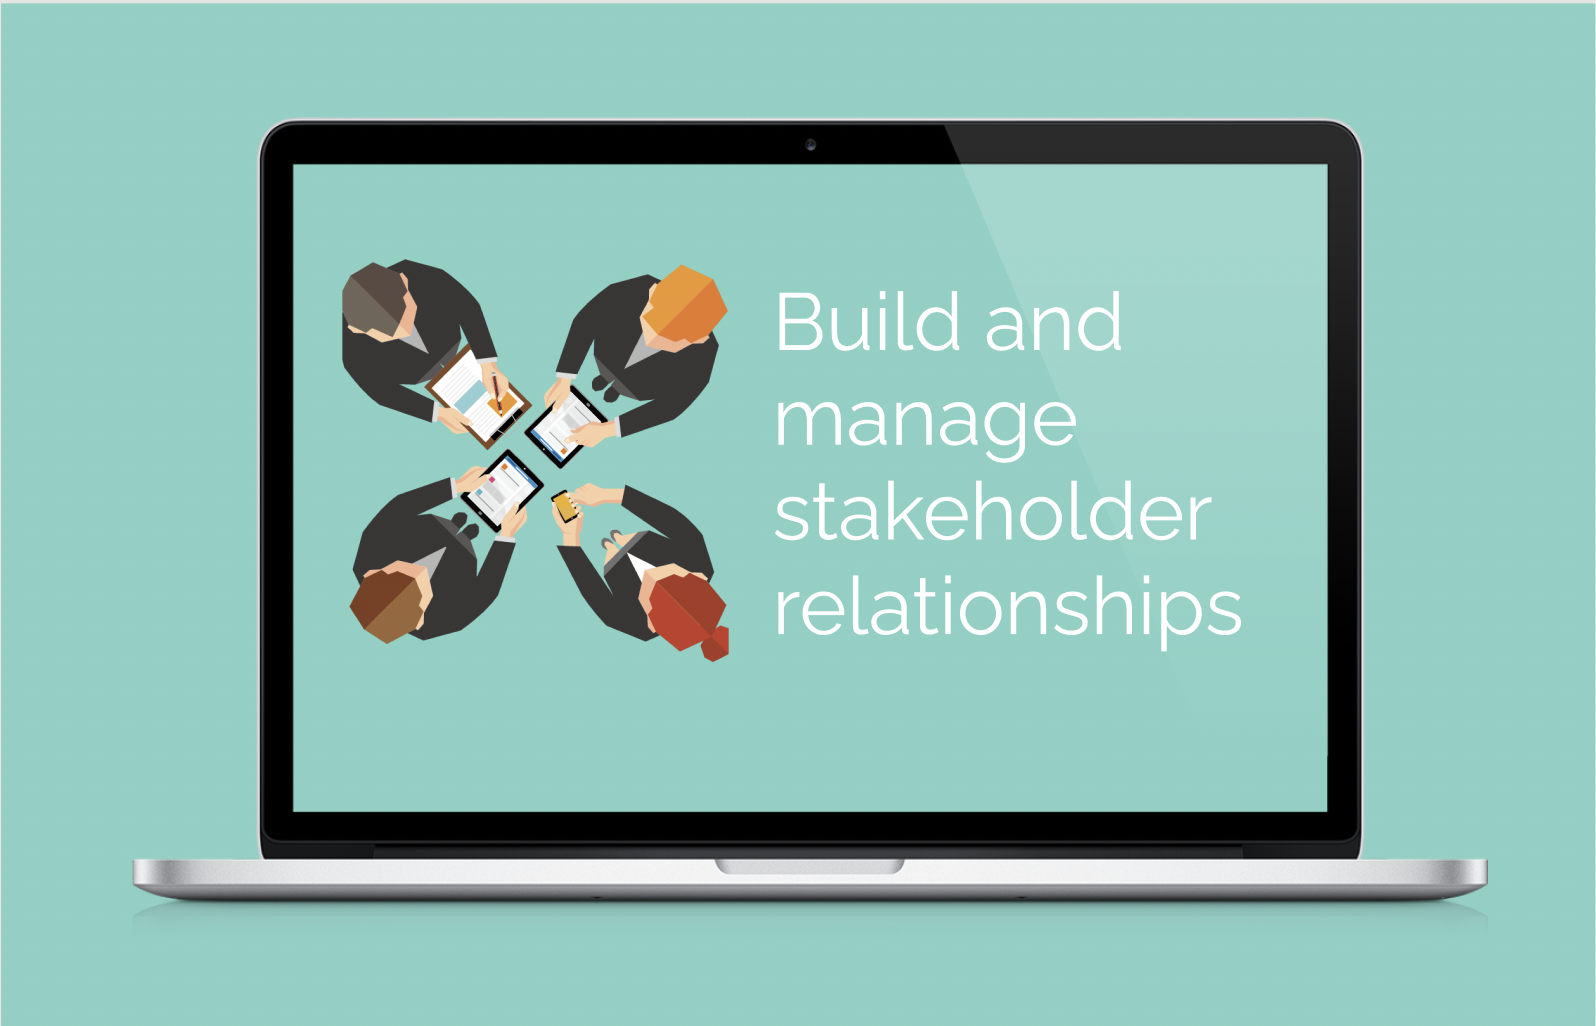 Managing stakeholder relationships